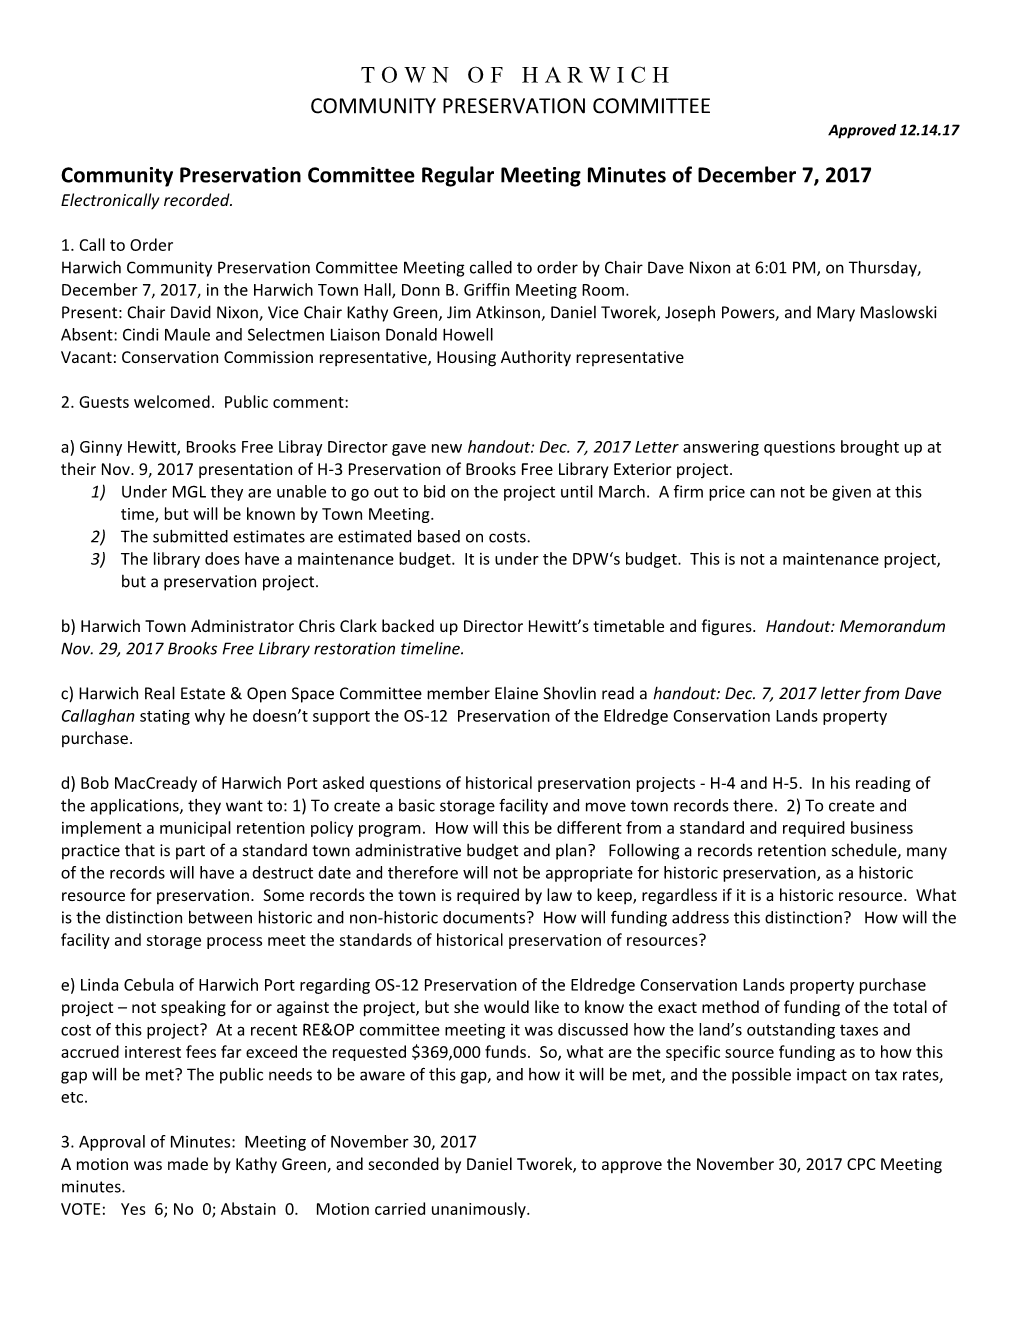 Community Preservation Committee Regular Meeting Minutes of December 7, 2017